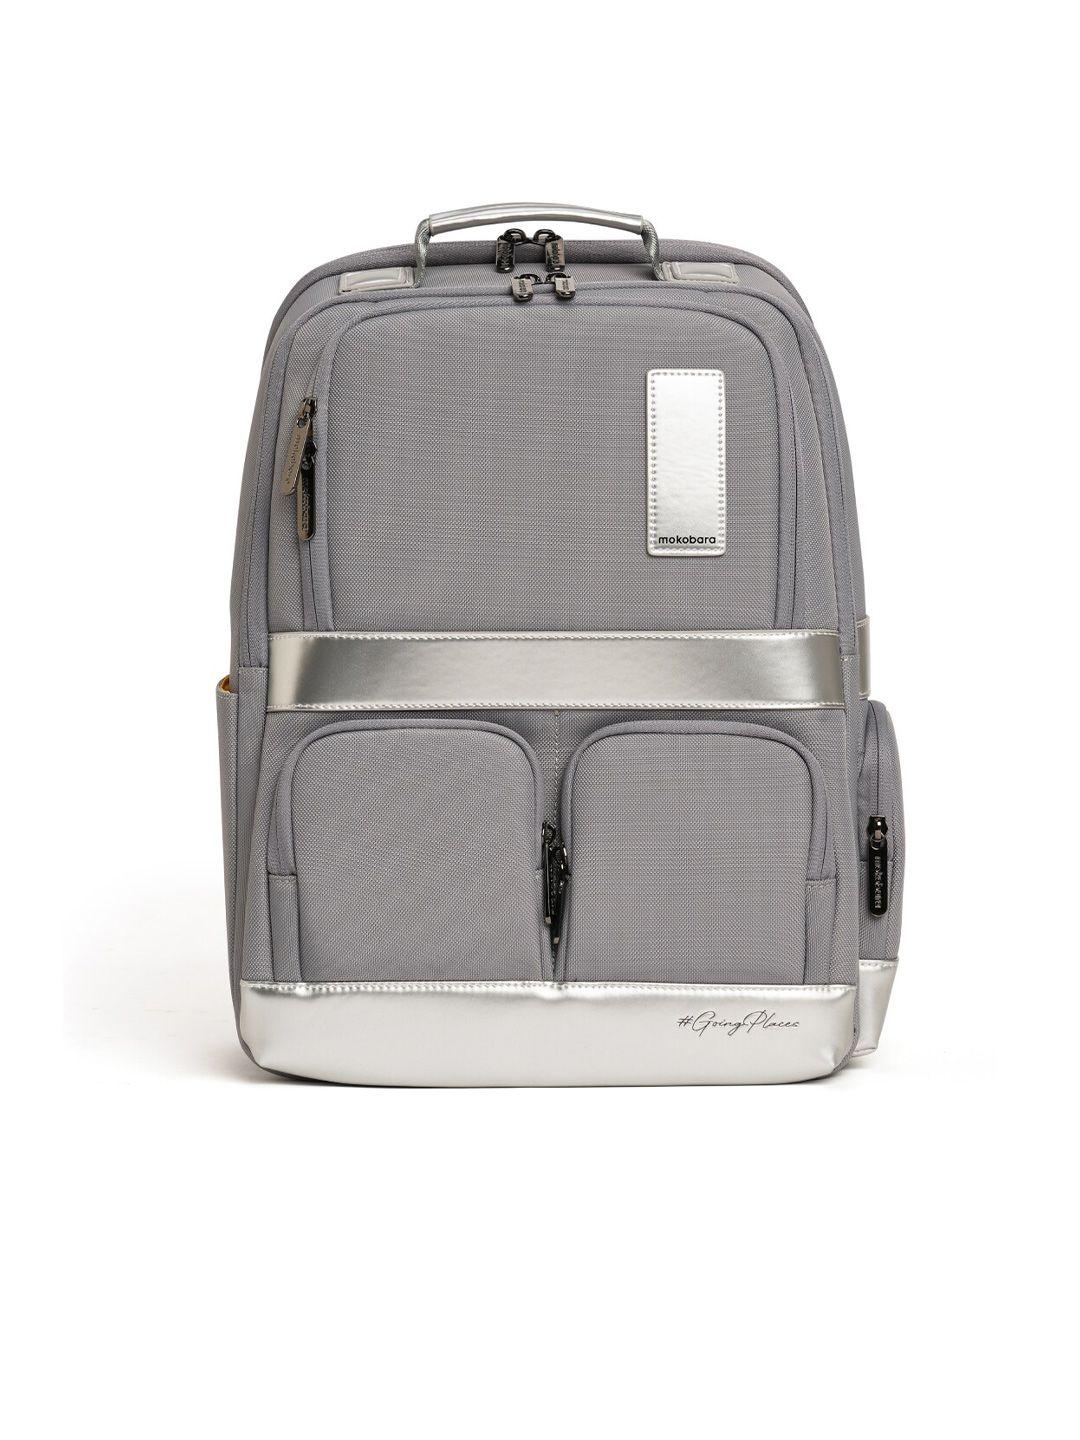 mokobara unisex 16 inch laptop backpack